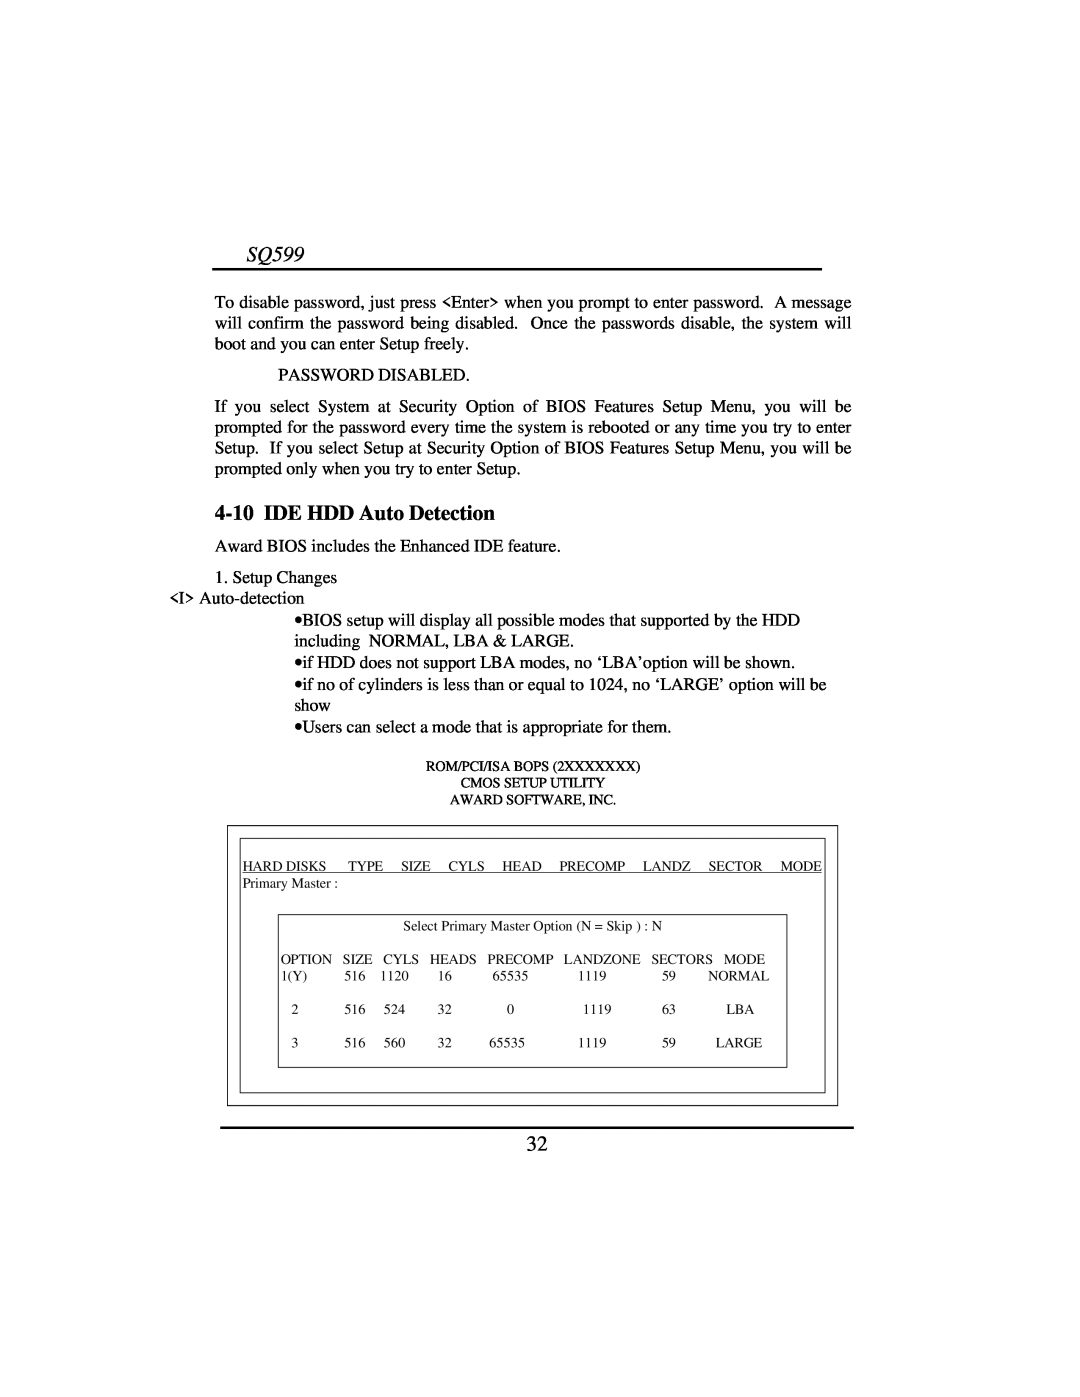 Intel SQ599 manual 4-10IDE HDD Auto Detection 